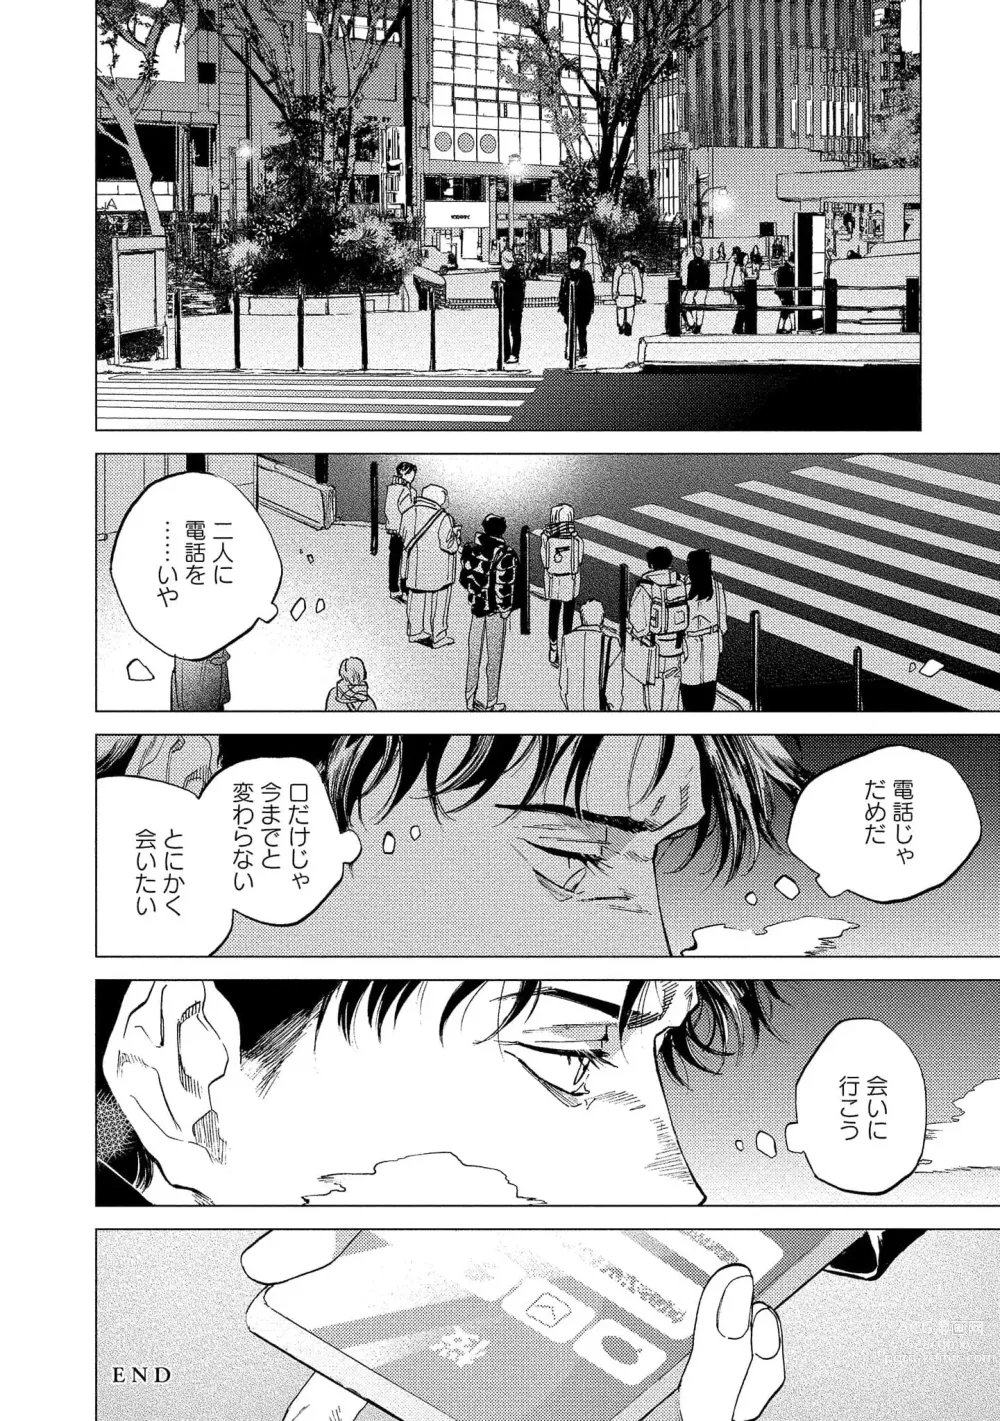 Page 154 of manga Fukushuu ga Tokenai